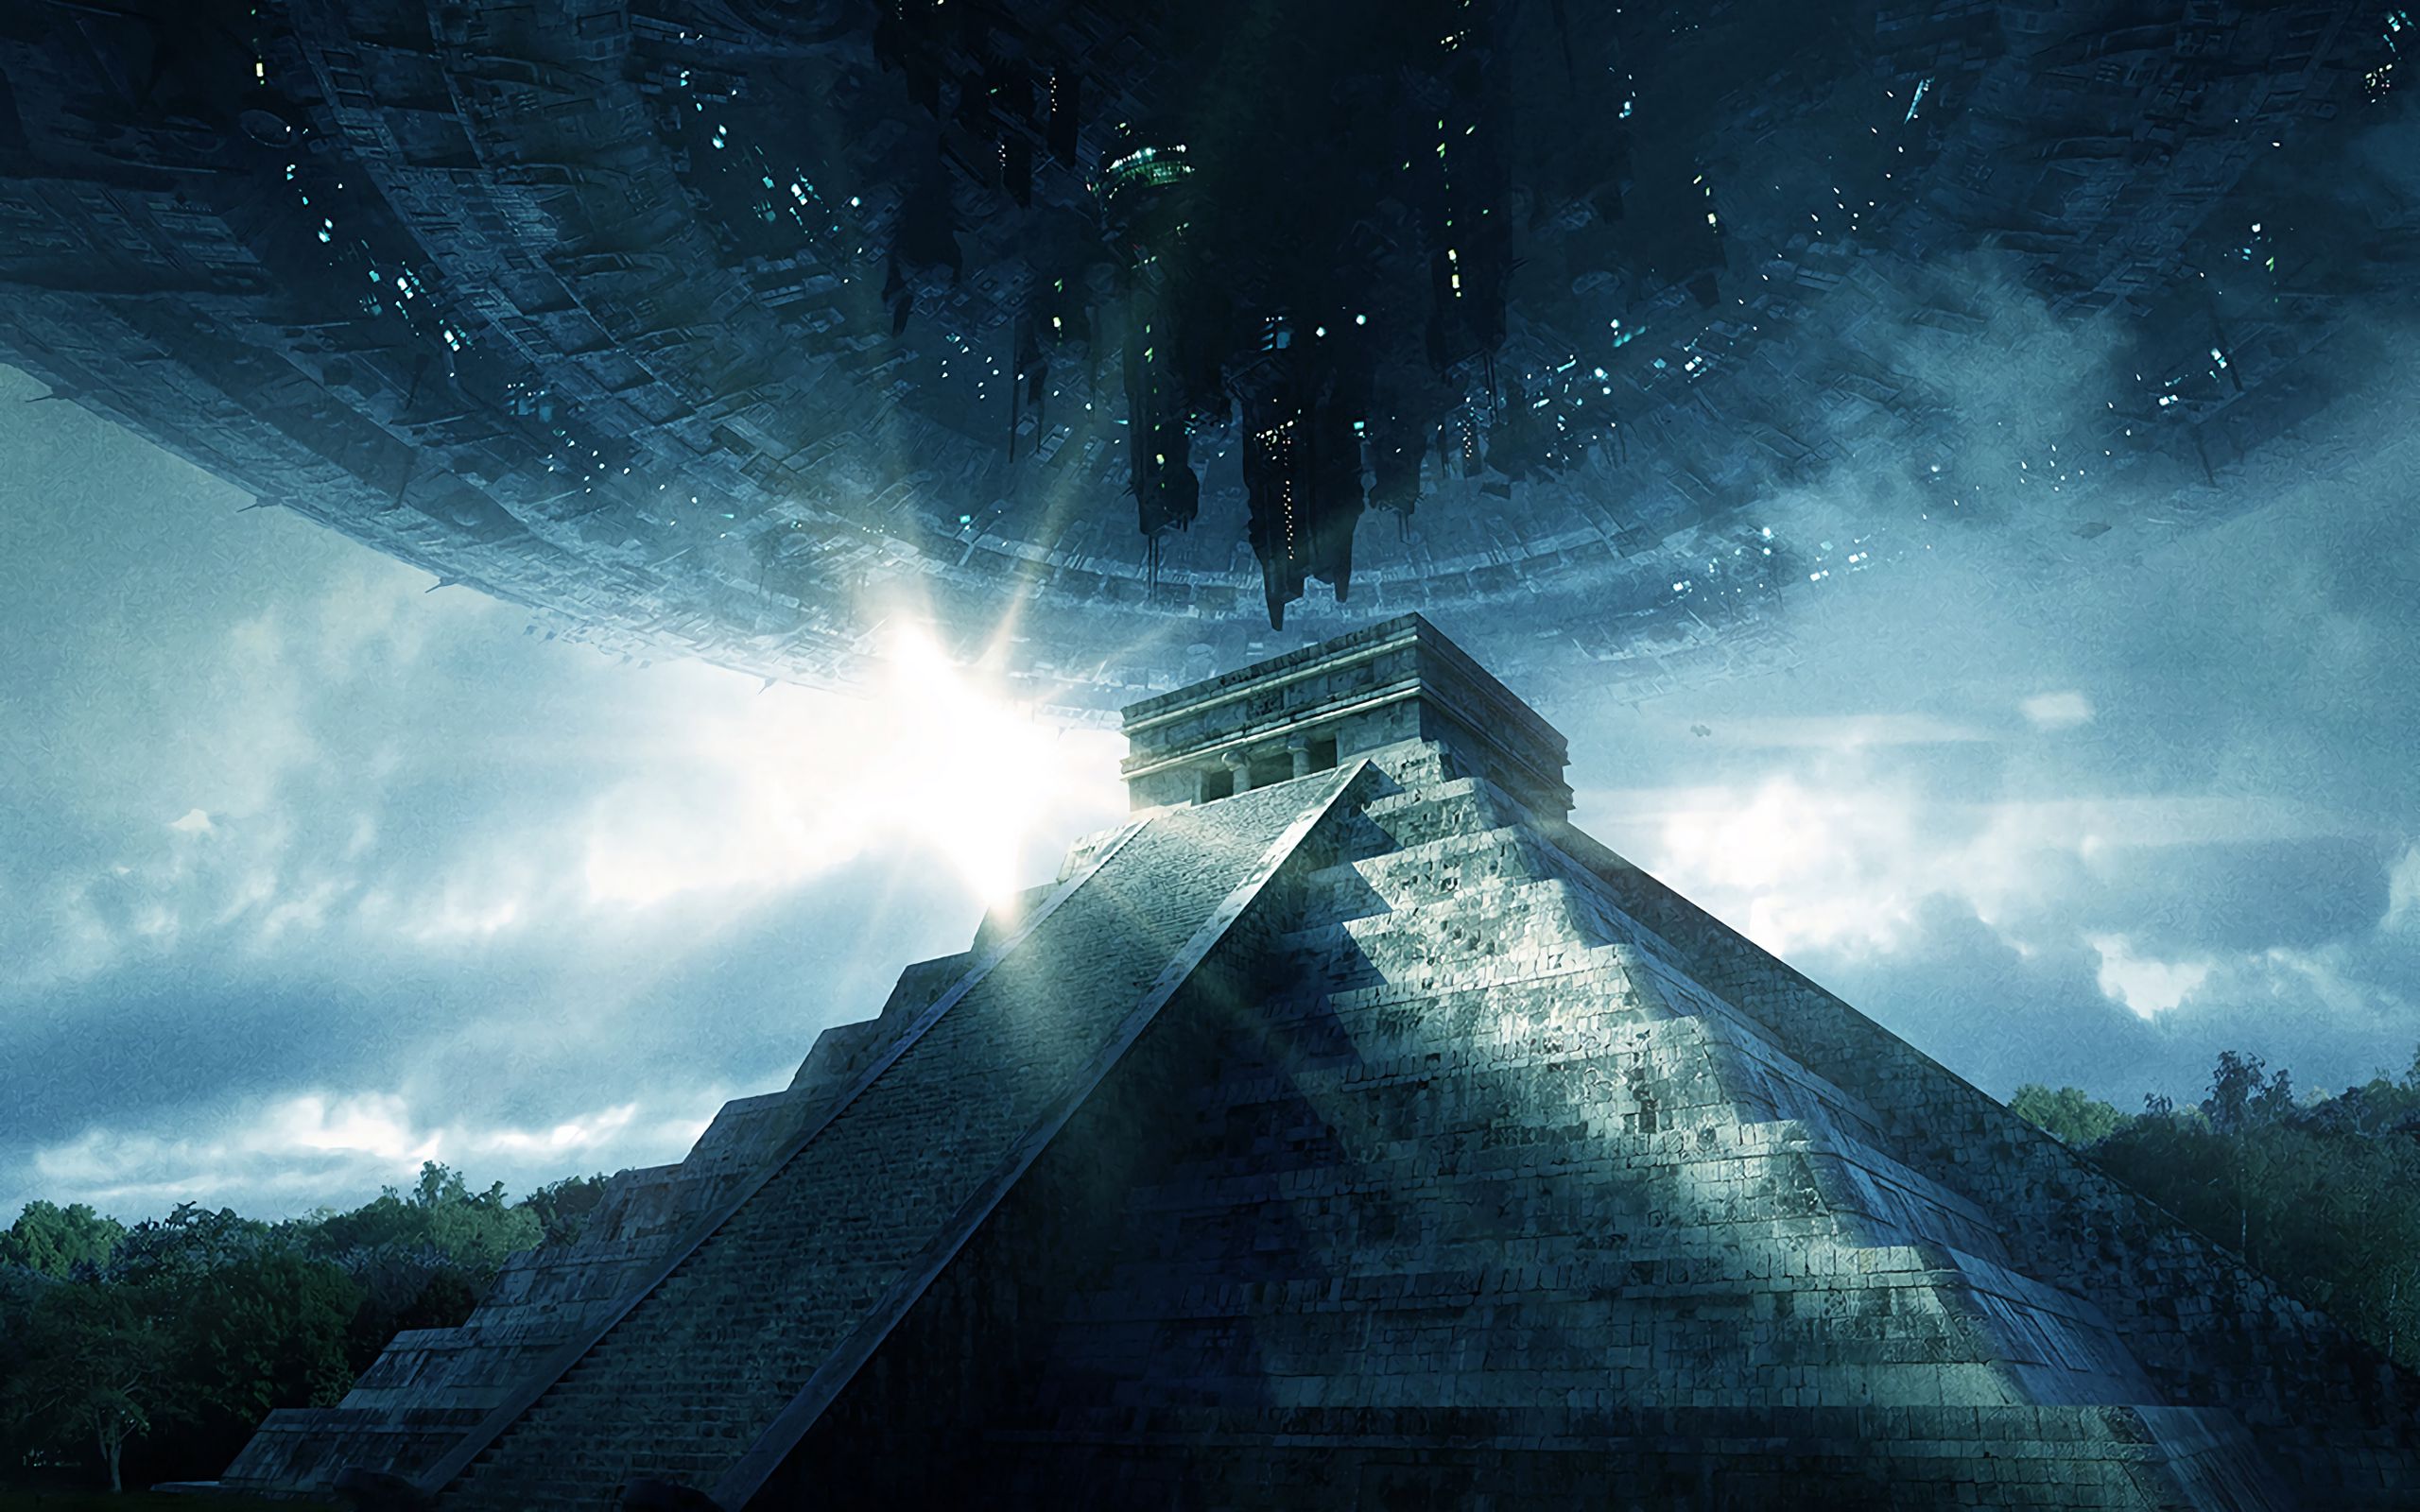 Wallpaper Pyramid Ufo Aliens Visit Contact